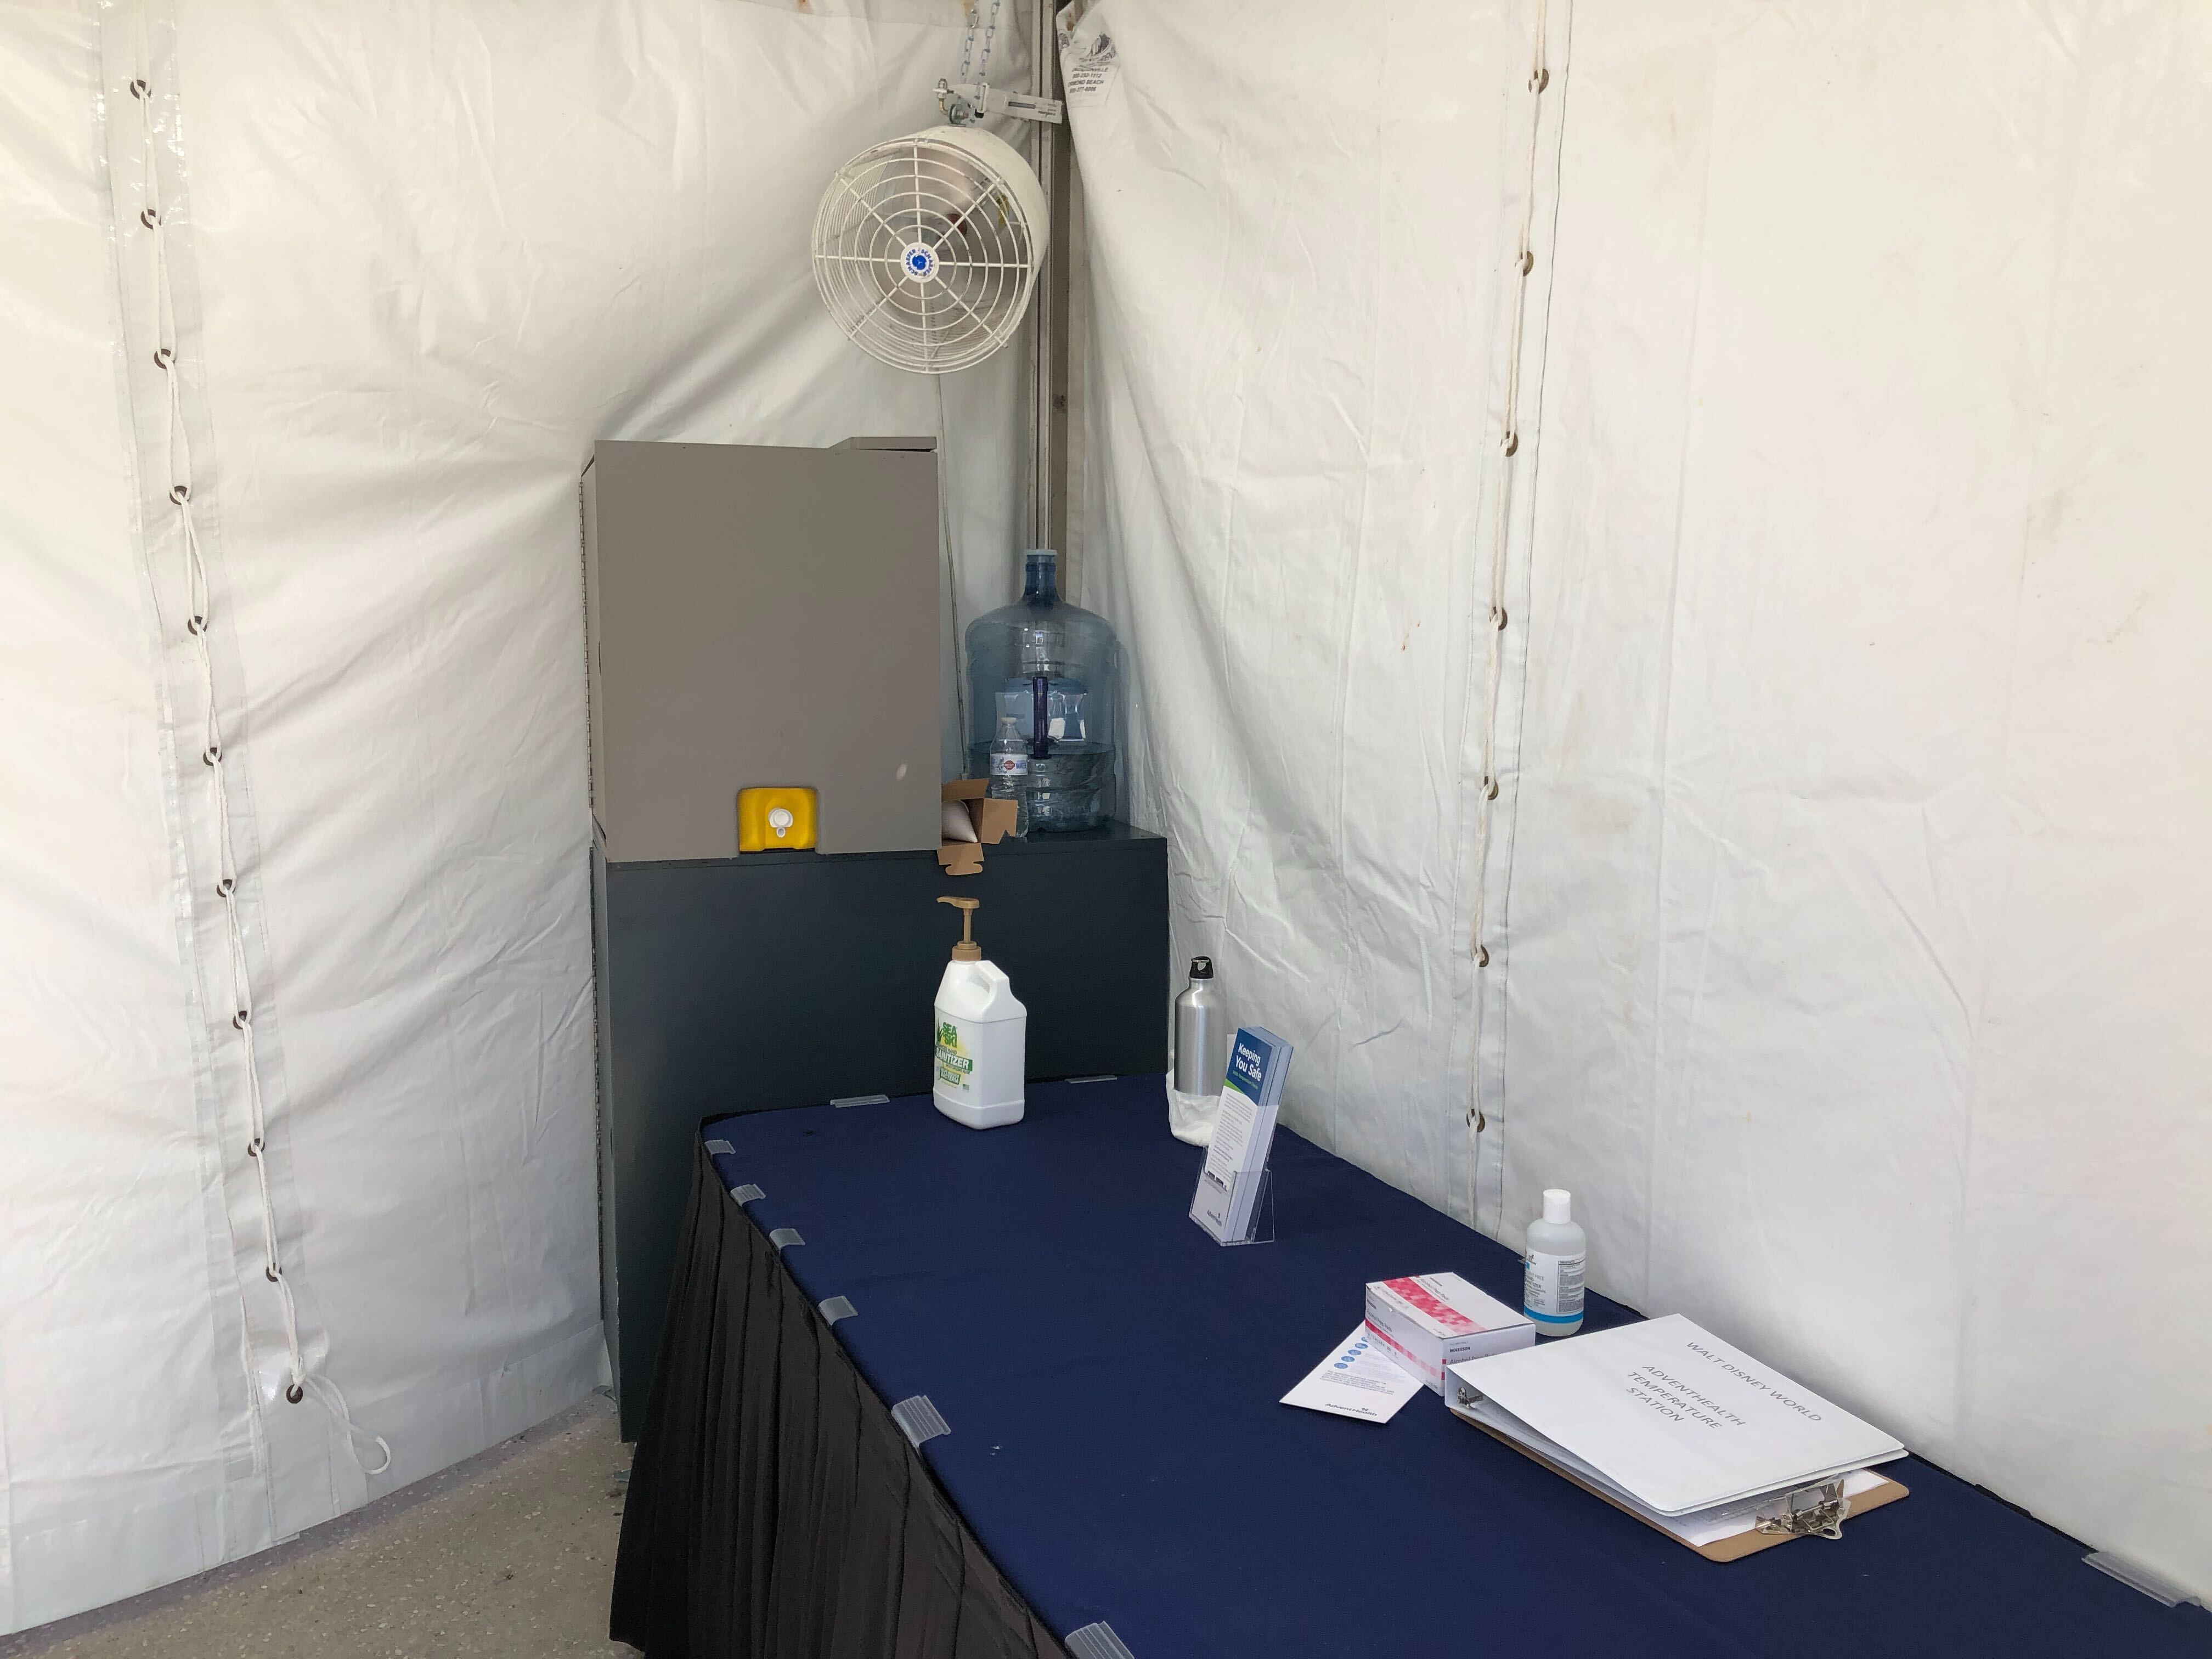 marketplace disney springs tent screening reopening may 20 5